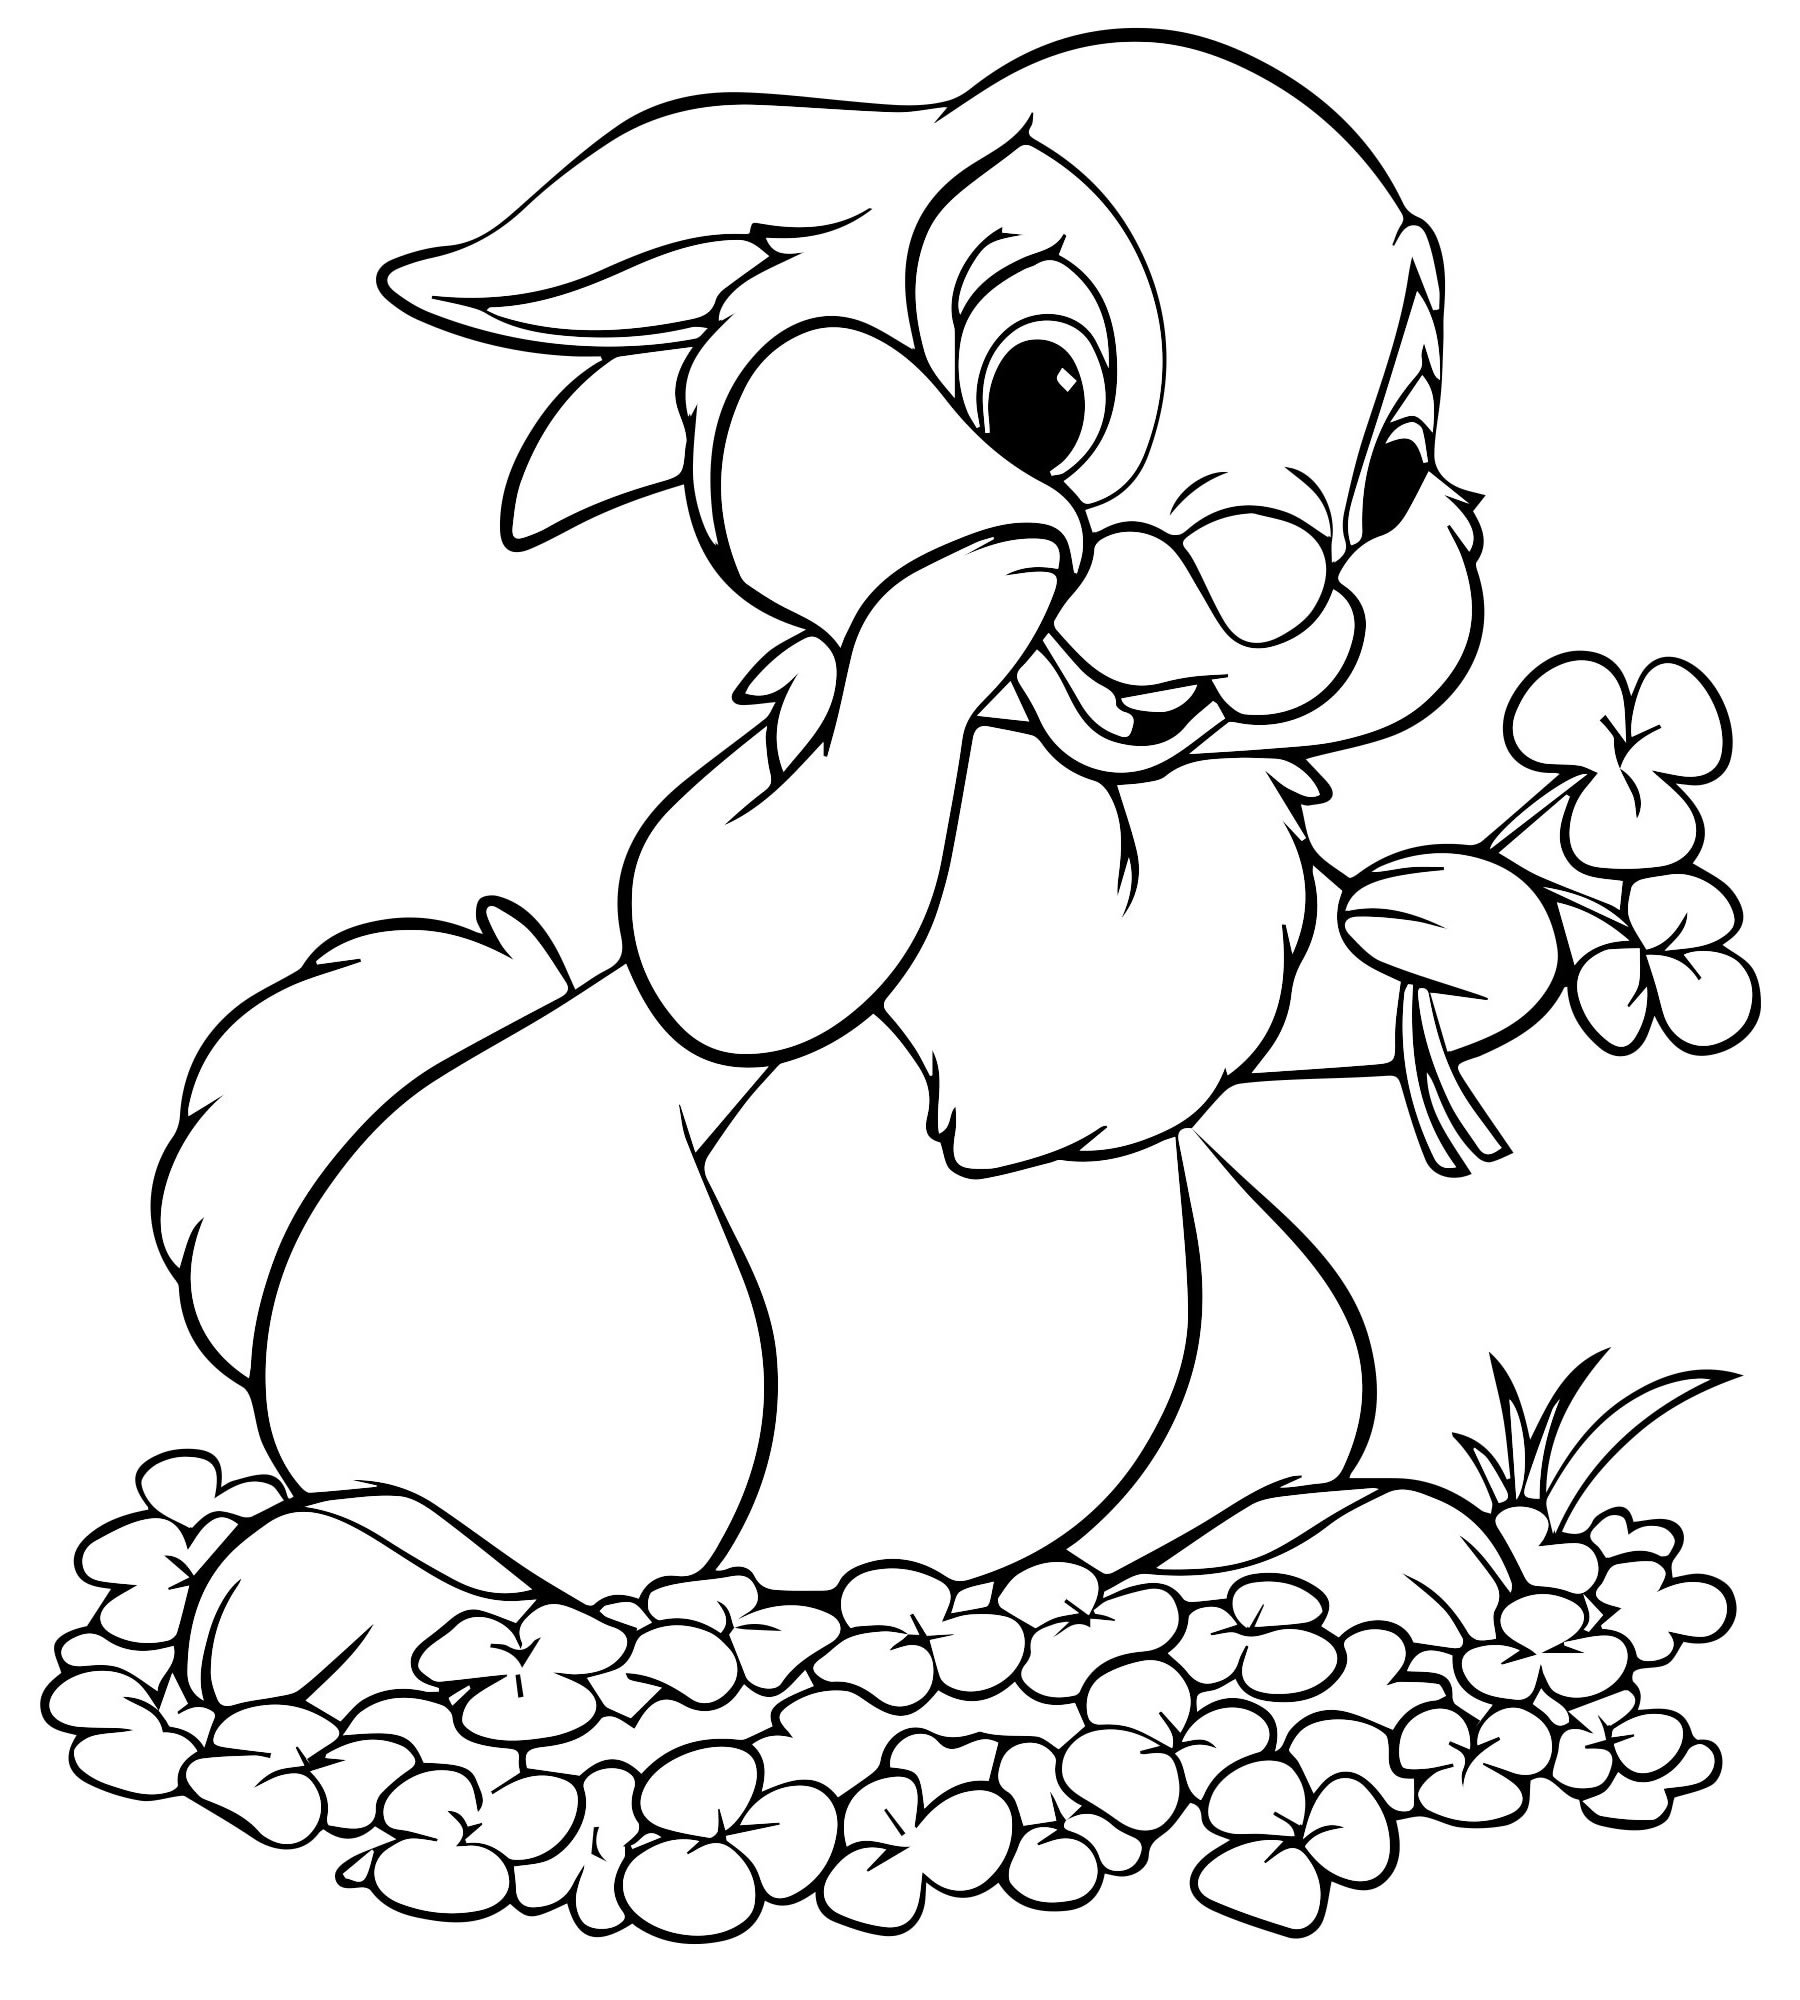 Картинки разукрашки. Кролик раскраска. Раскраска «Зайка». Заяц раскраска для детей. Зайчик раскраска для малышей.